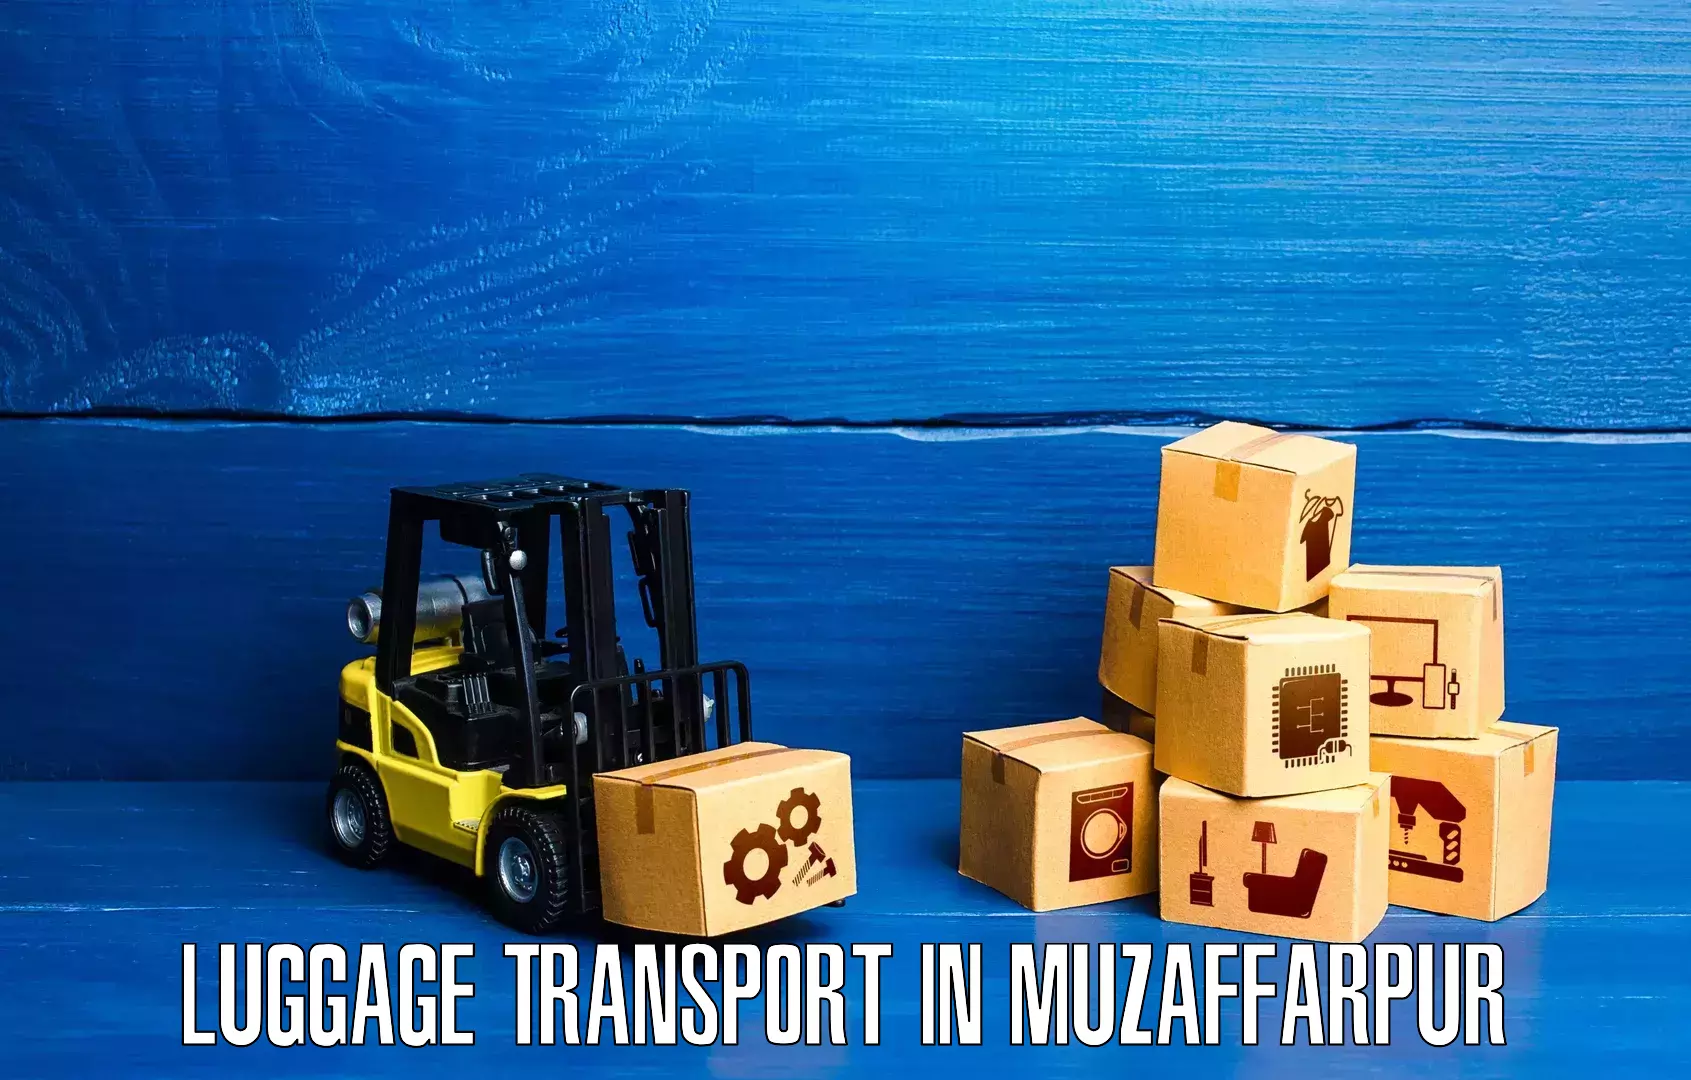 Luggage transit service in Muzaffarpur